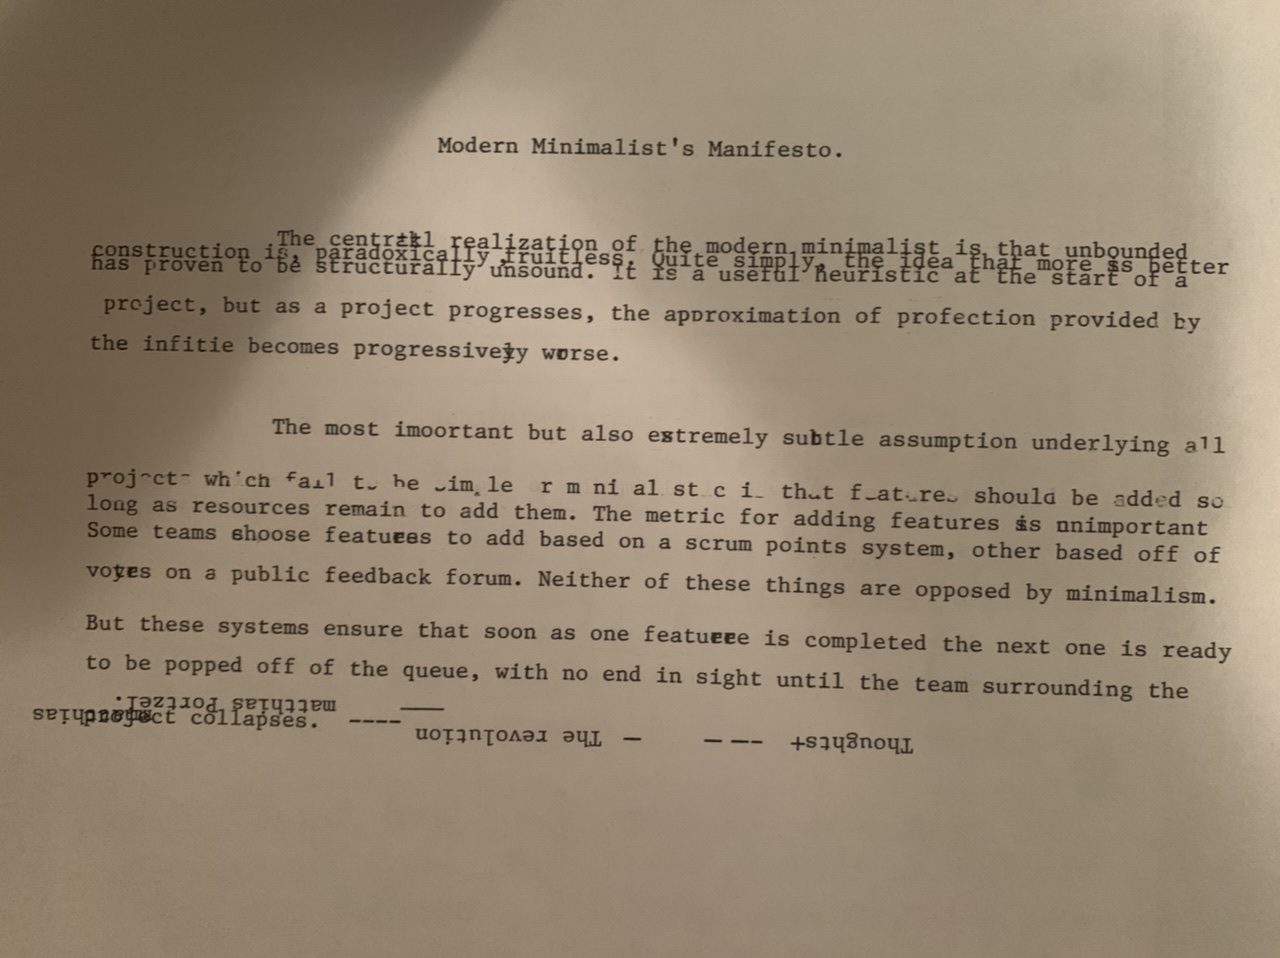 A typewritten document entitled “Modern Minimalist’s Manifesto”